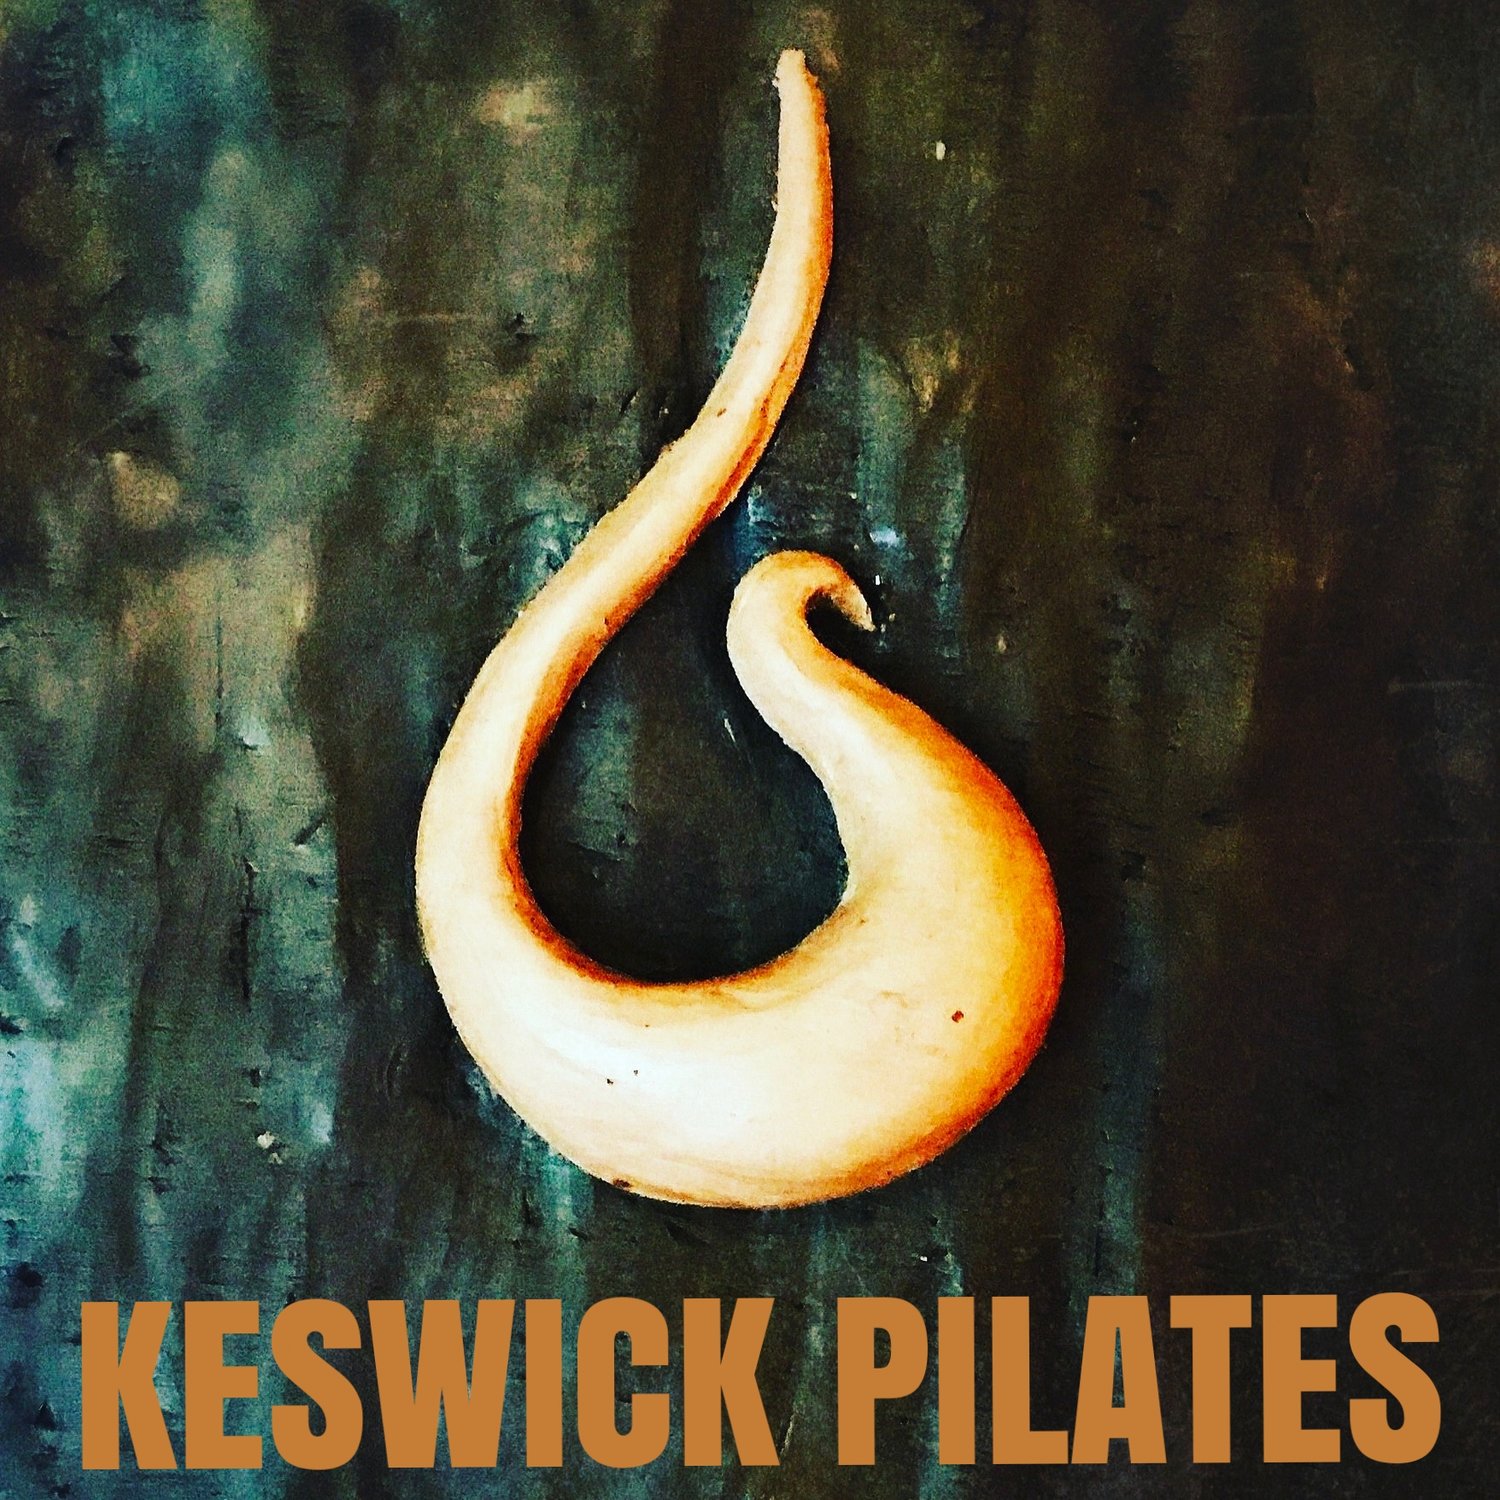 Keswick Pilates